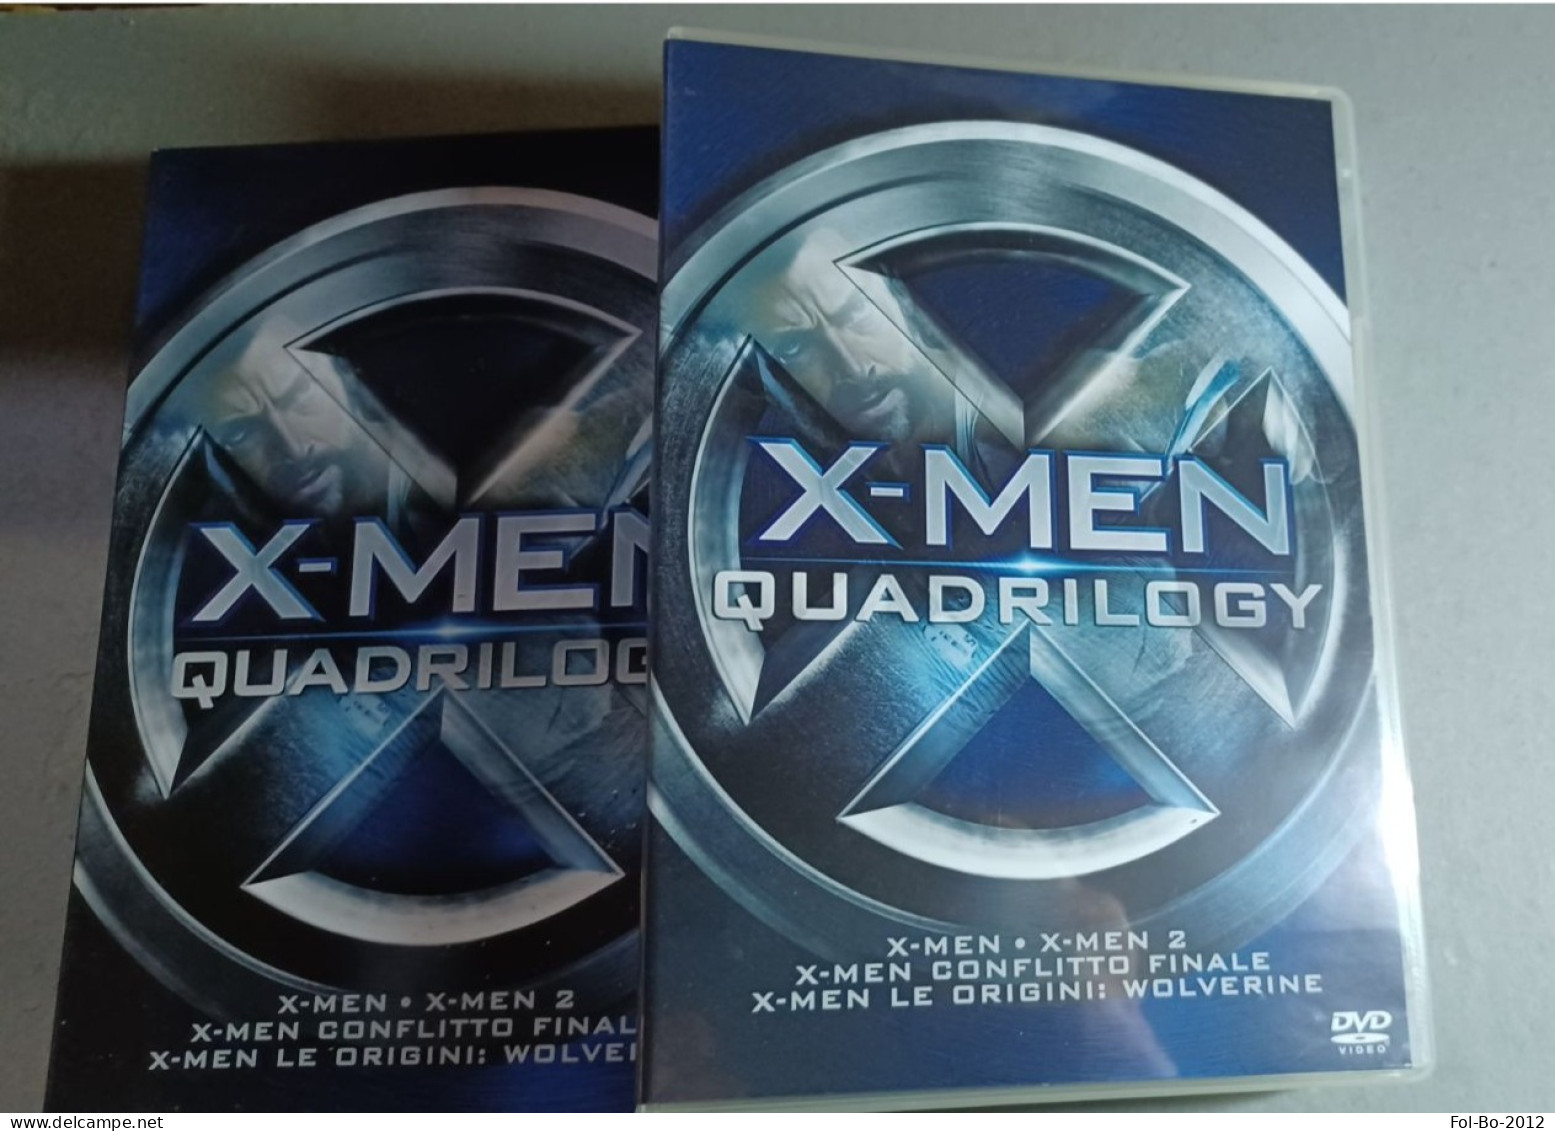 X-MEN Quadrilogy DVD.MARVEL - Fantastici